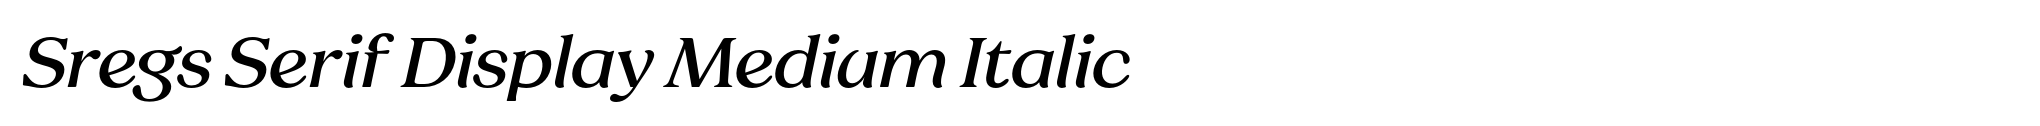 Sregs Serif Display Medium Italic image